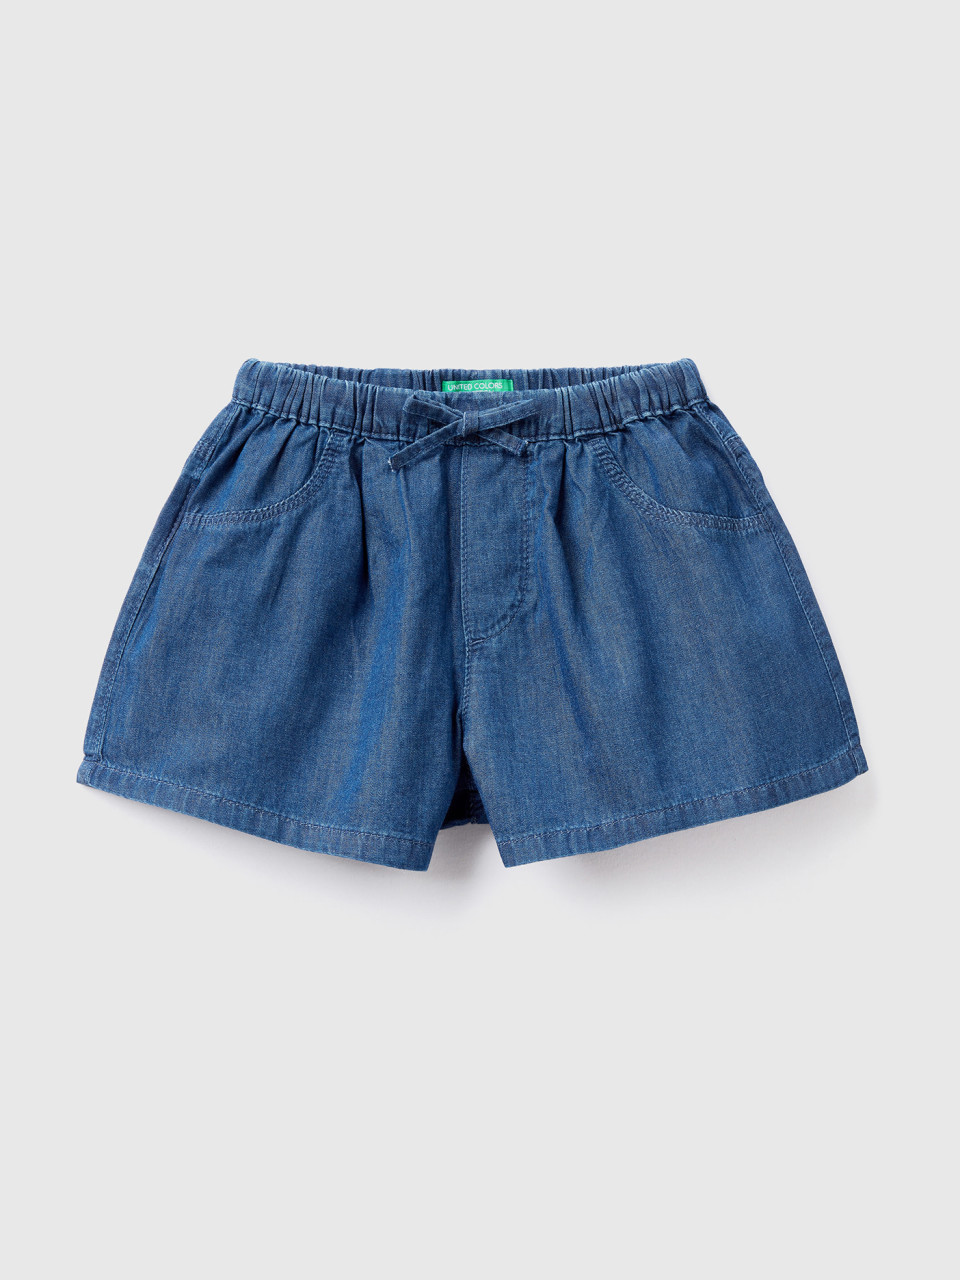 Benetton, Shorts Leggeri Effetto Jeans, Blu, Bambini